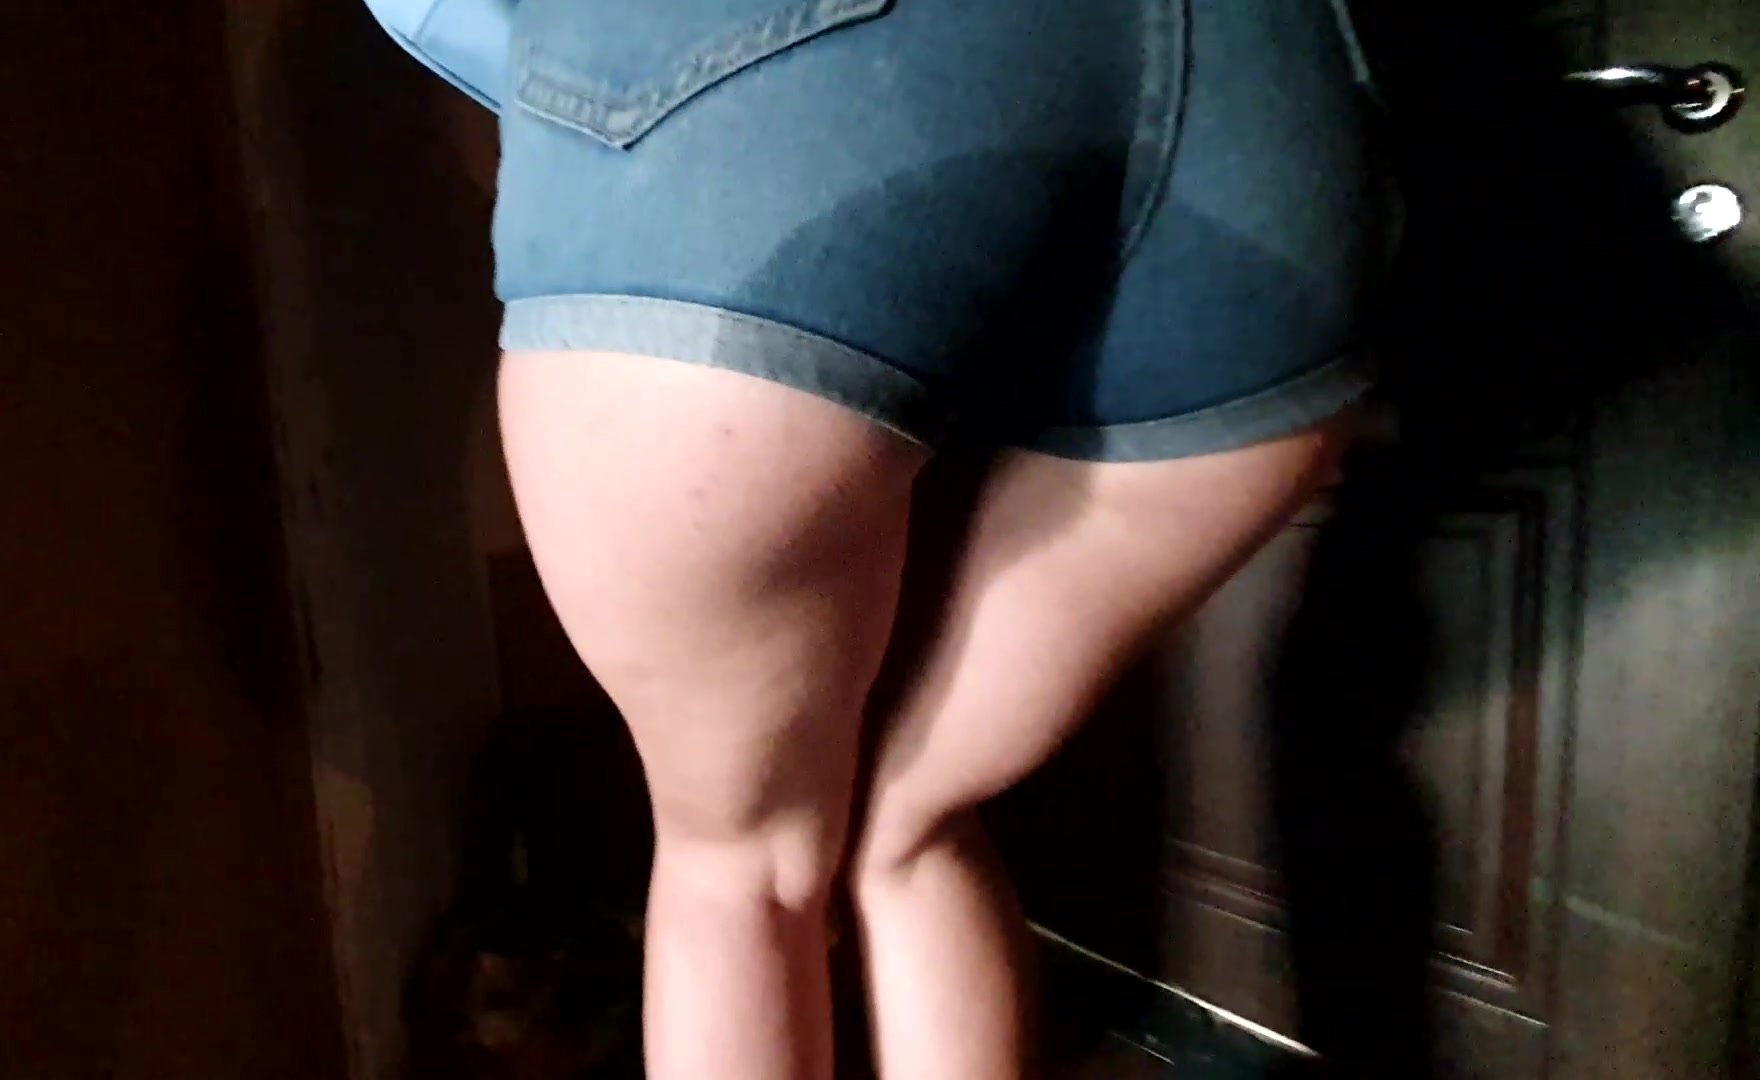 Wet her Jean shorts